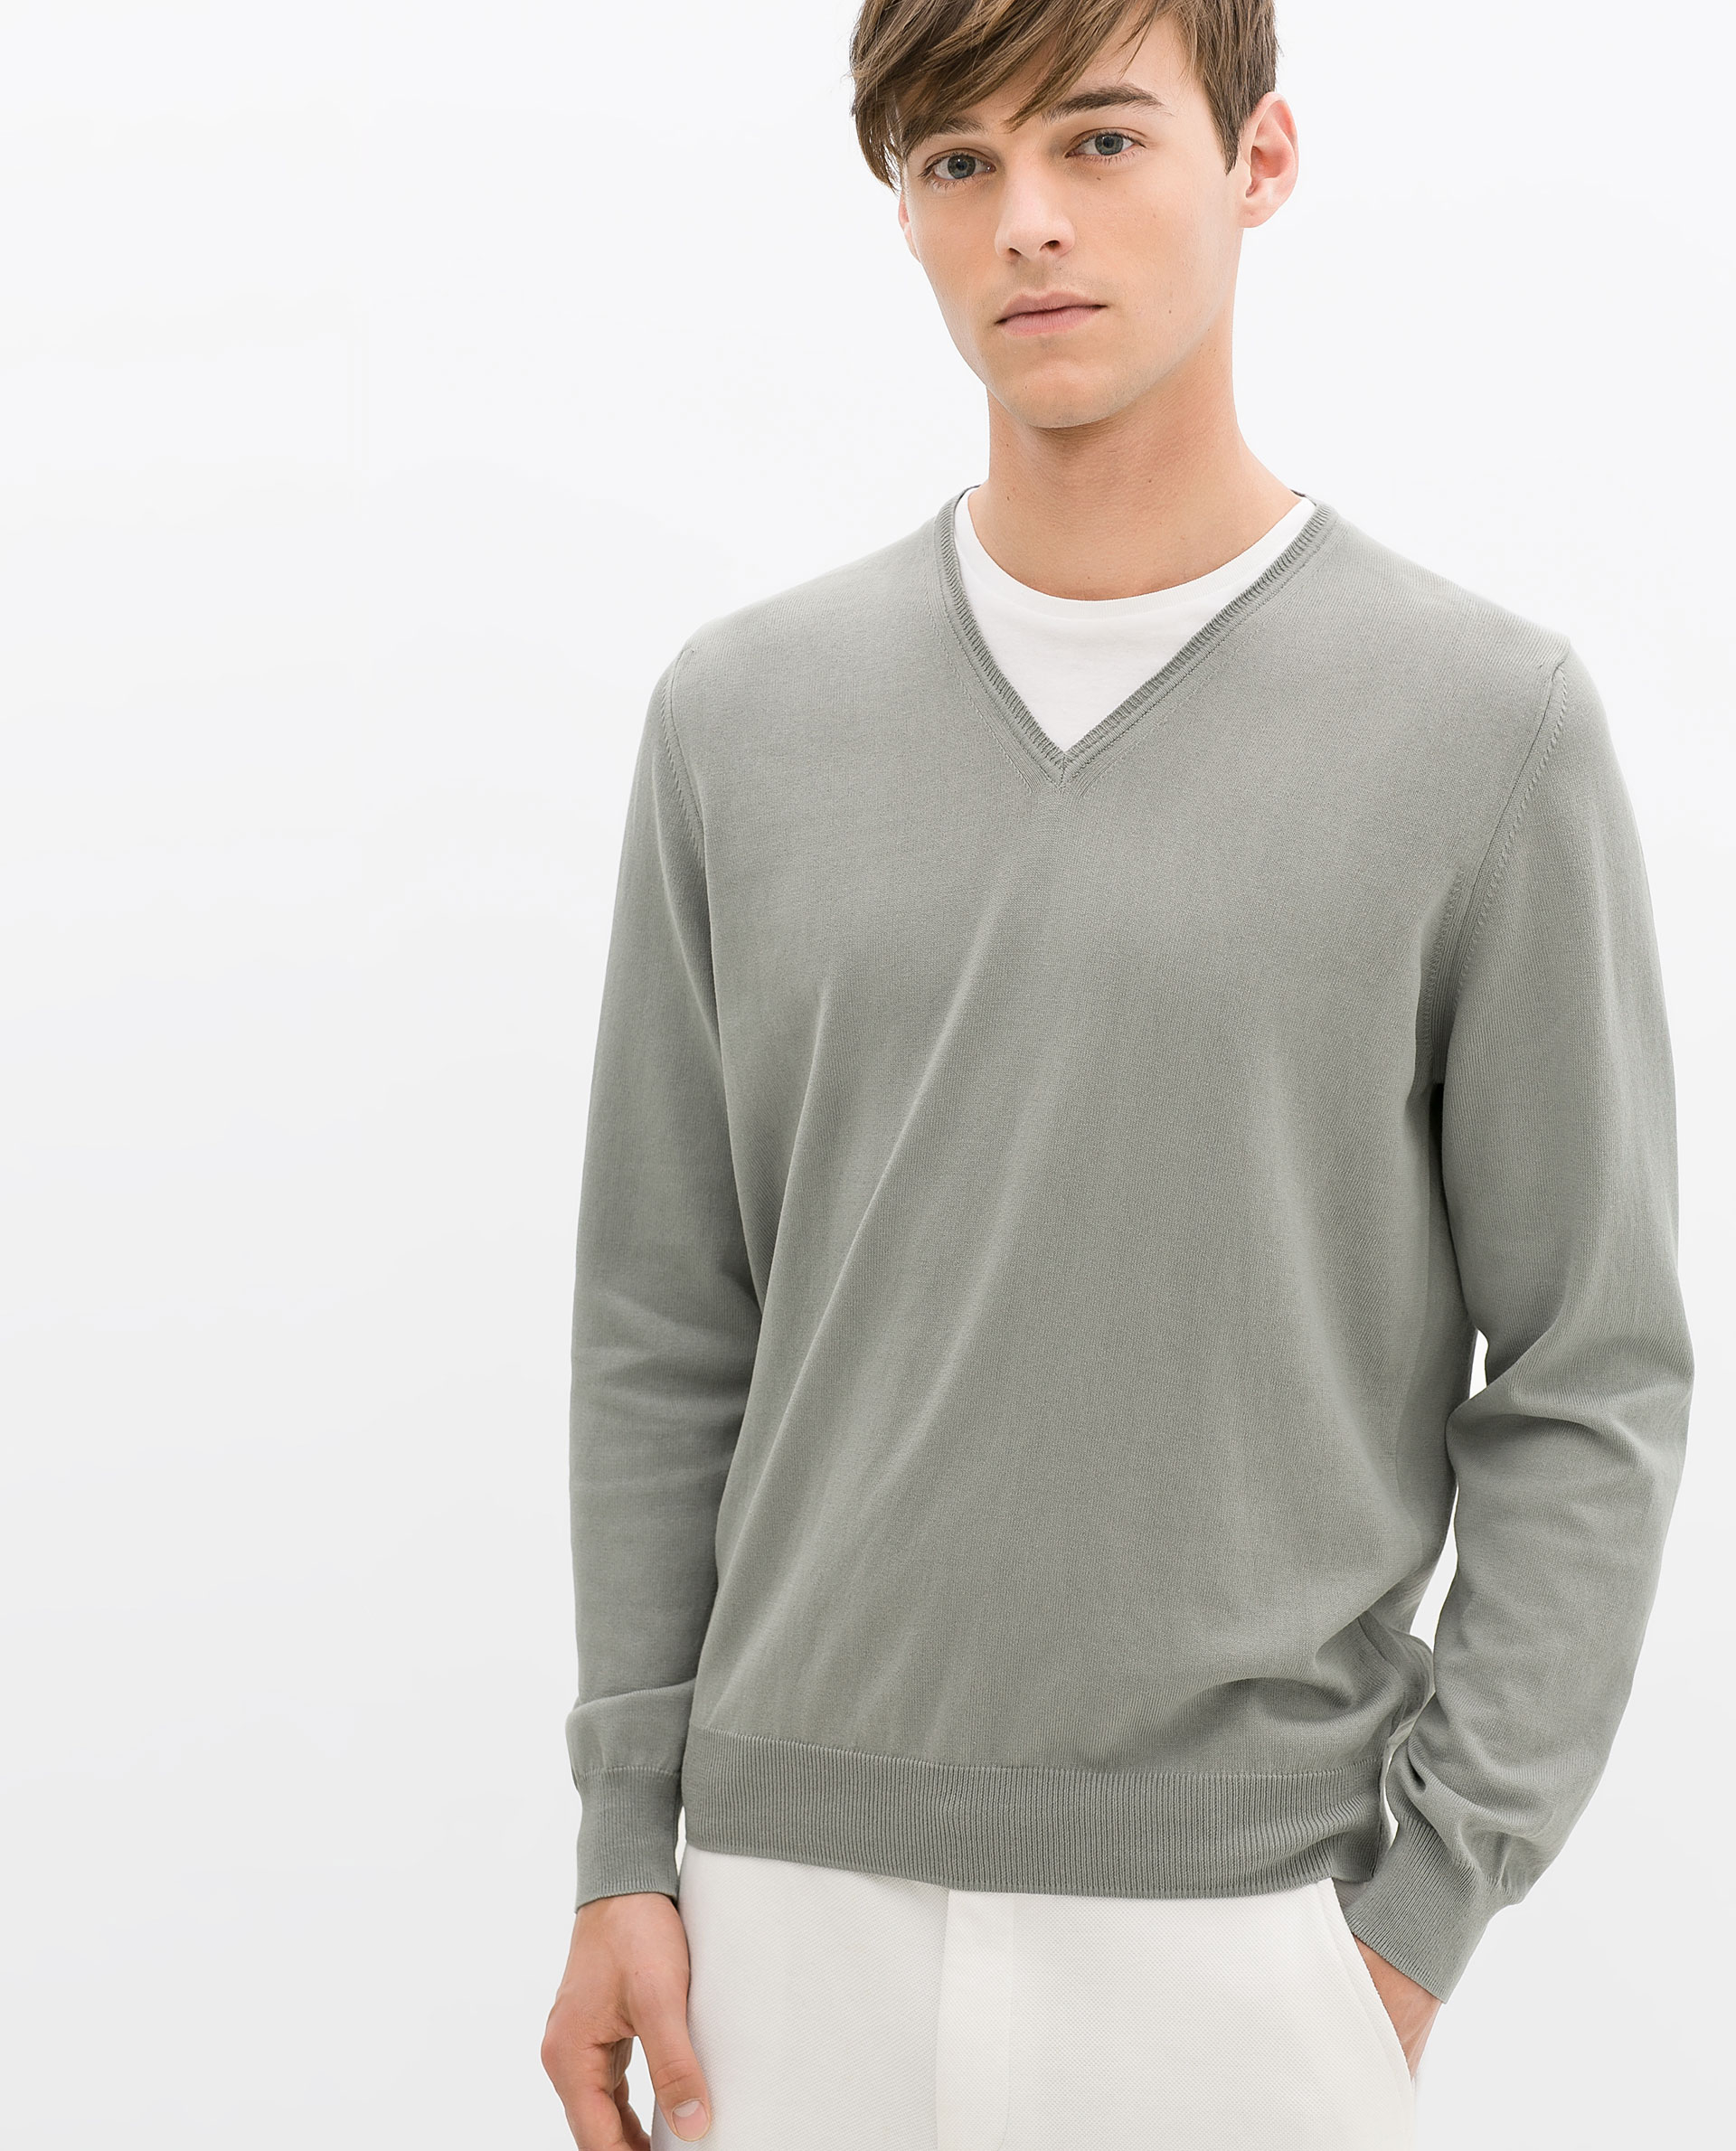 Pullover turtleneck men long sleeve sweater autumn winter